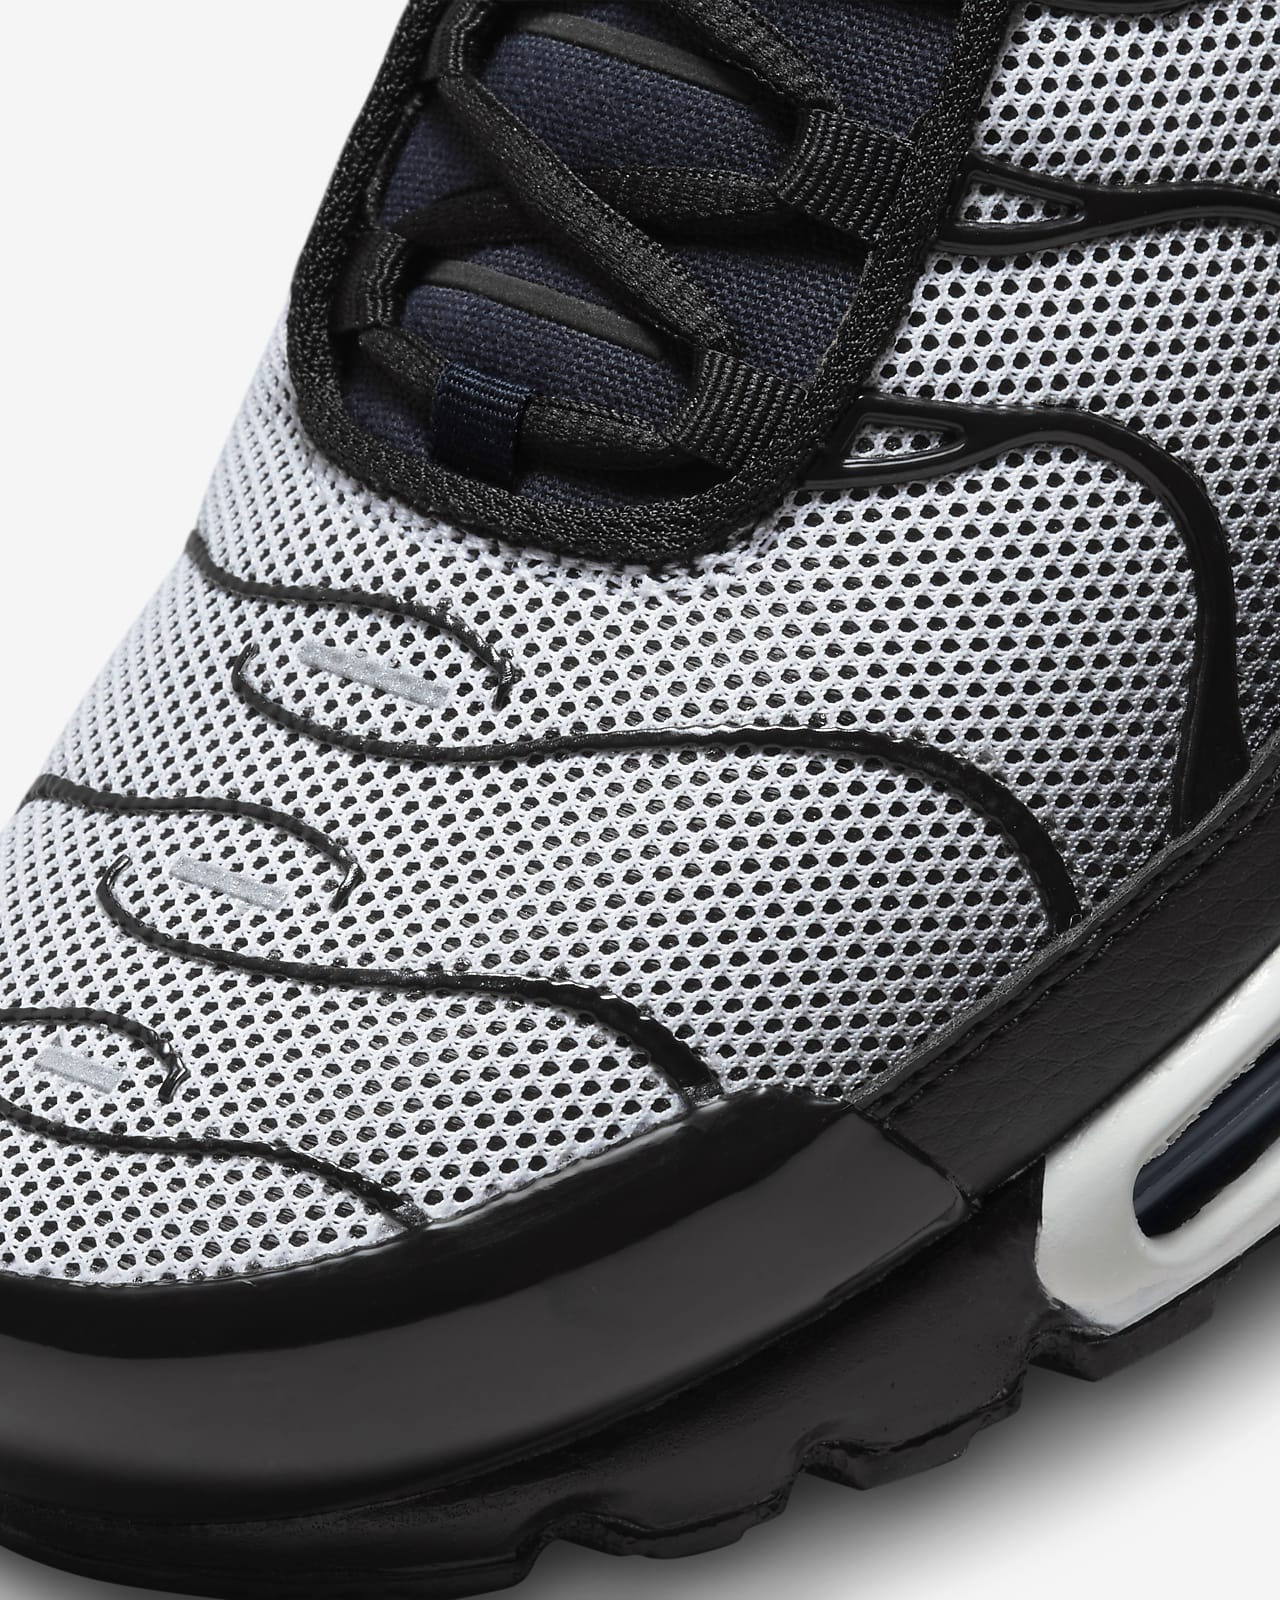 Nike Air Max Plus Tn3 Obsidian On Feet Video 